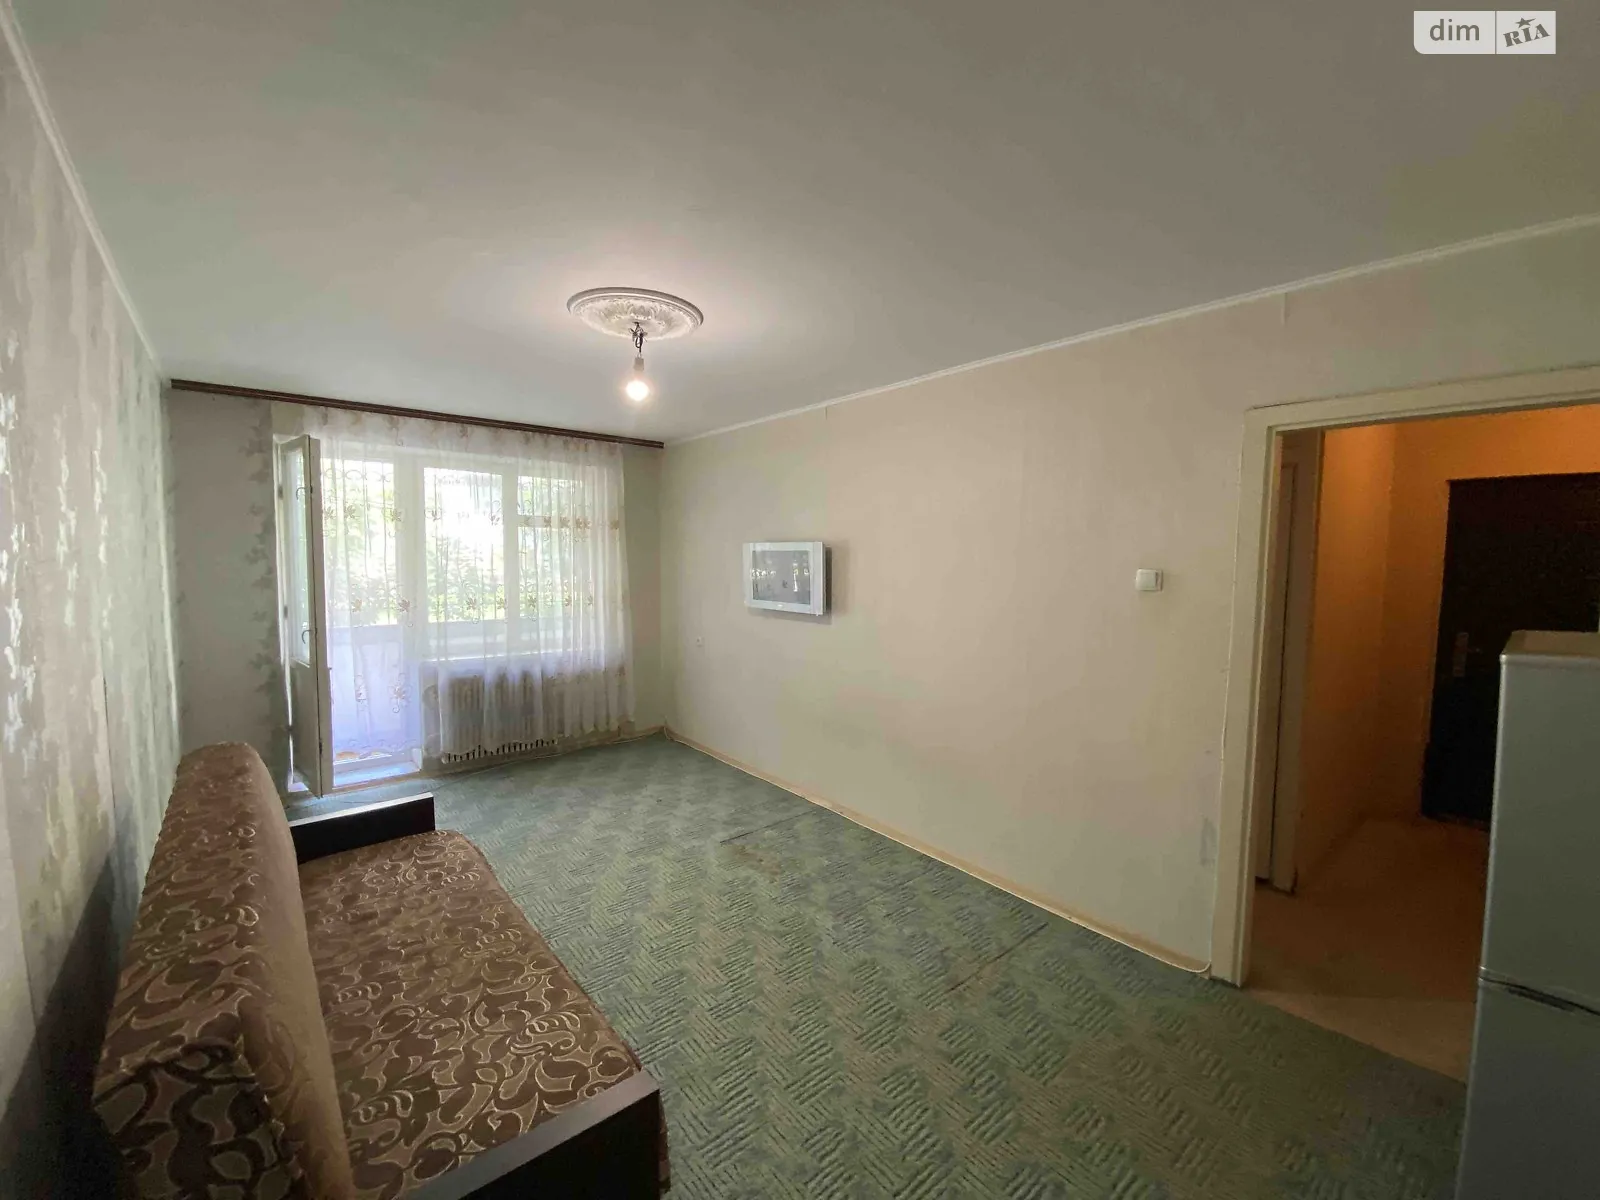 Продается комната 25 кв. м в Виннице, цена: 12800 $ - фото 1